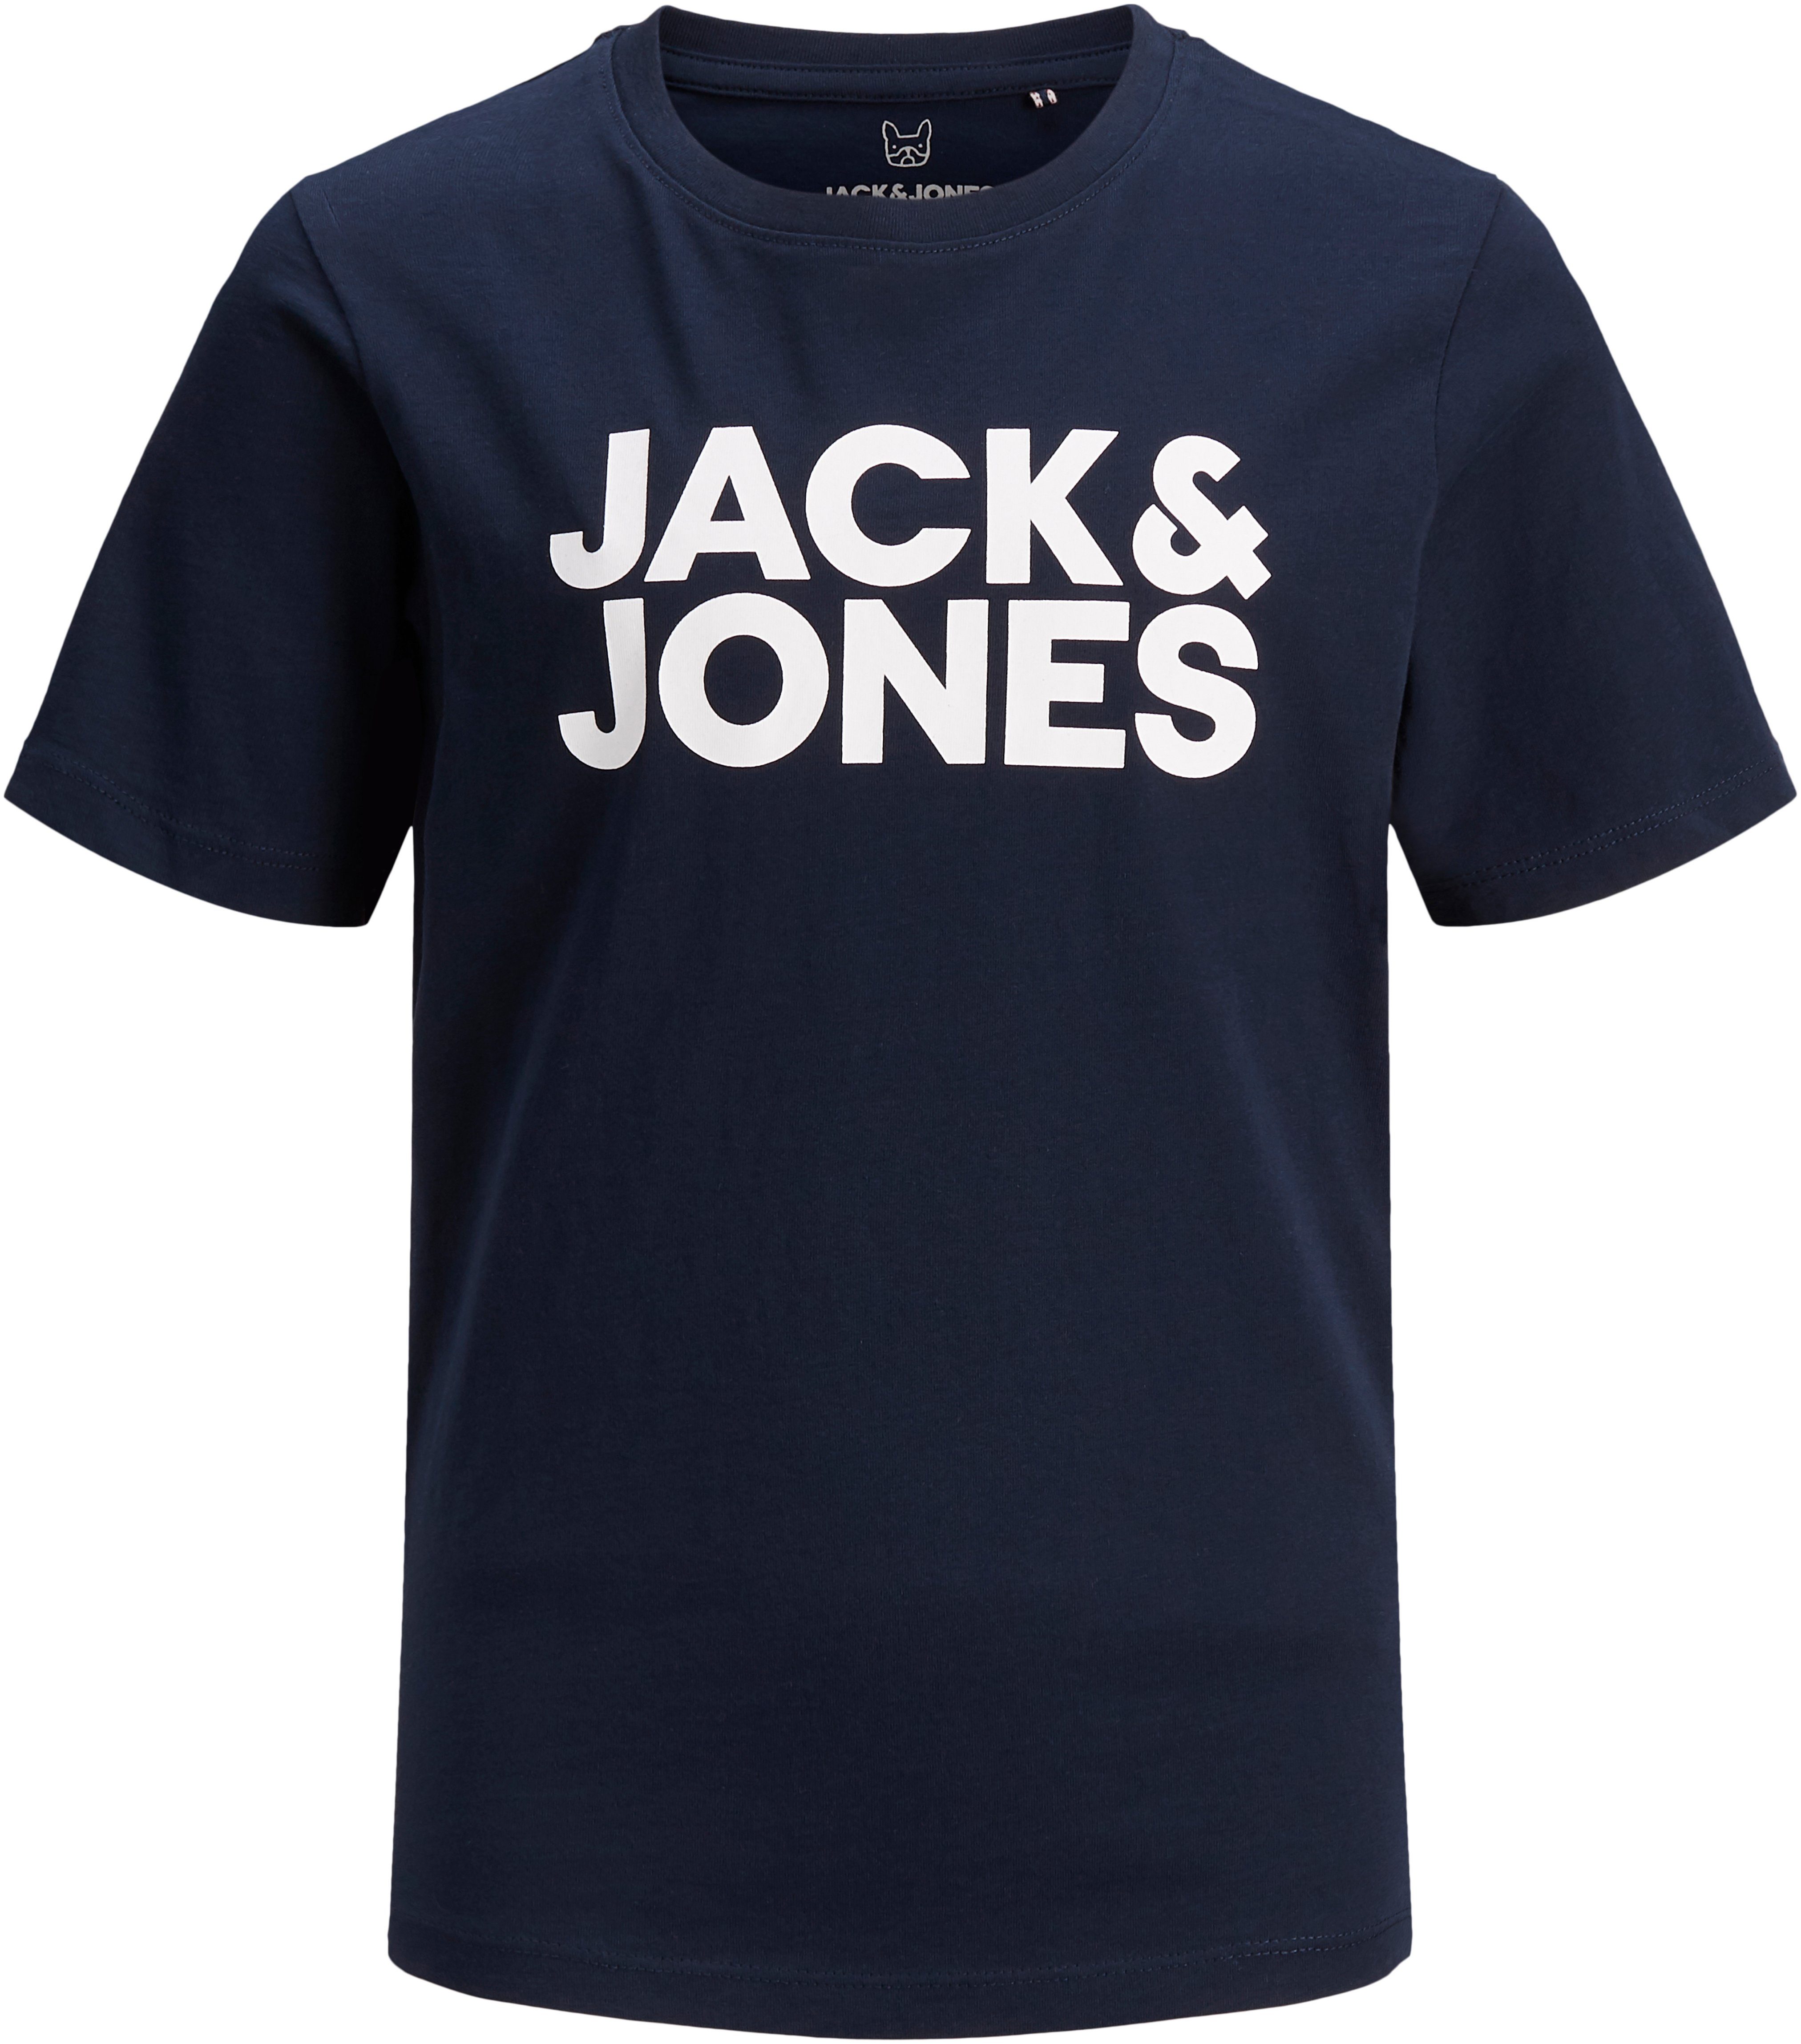 Jack & Jones T-Shirt Print Junior navy blazer/Large